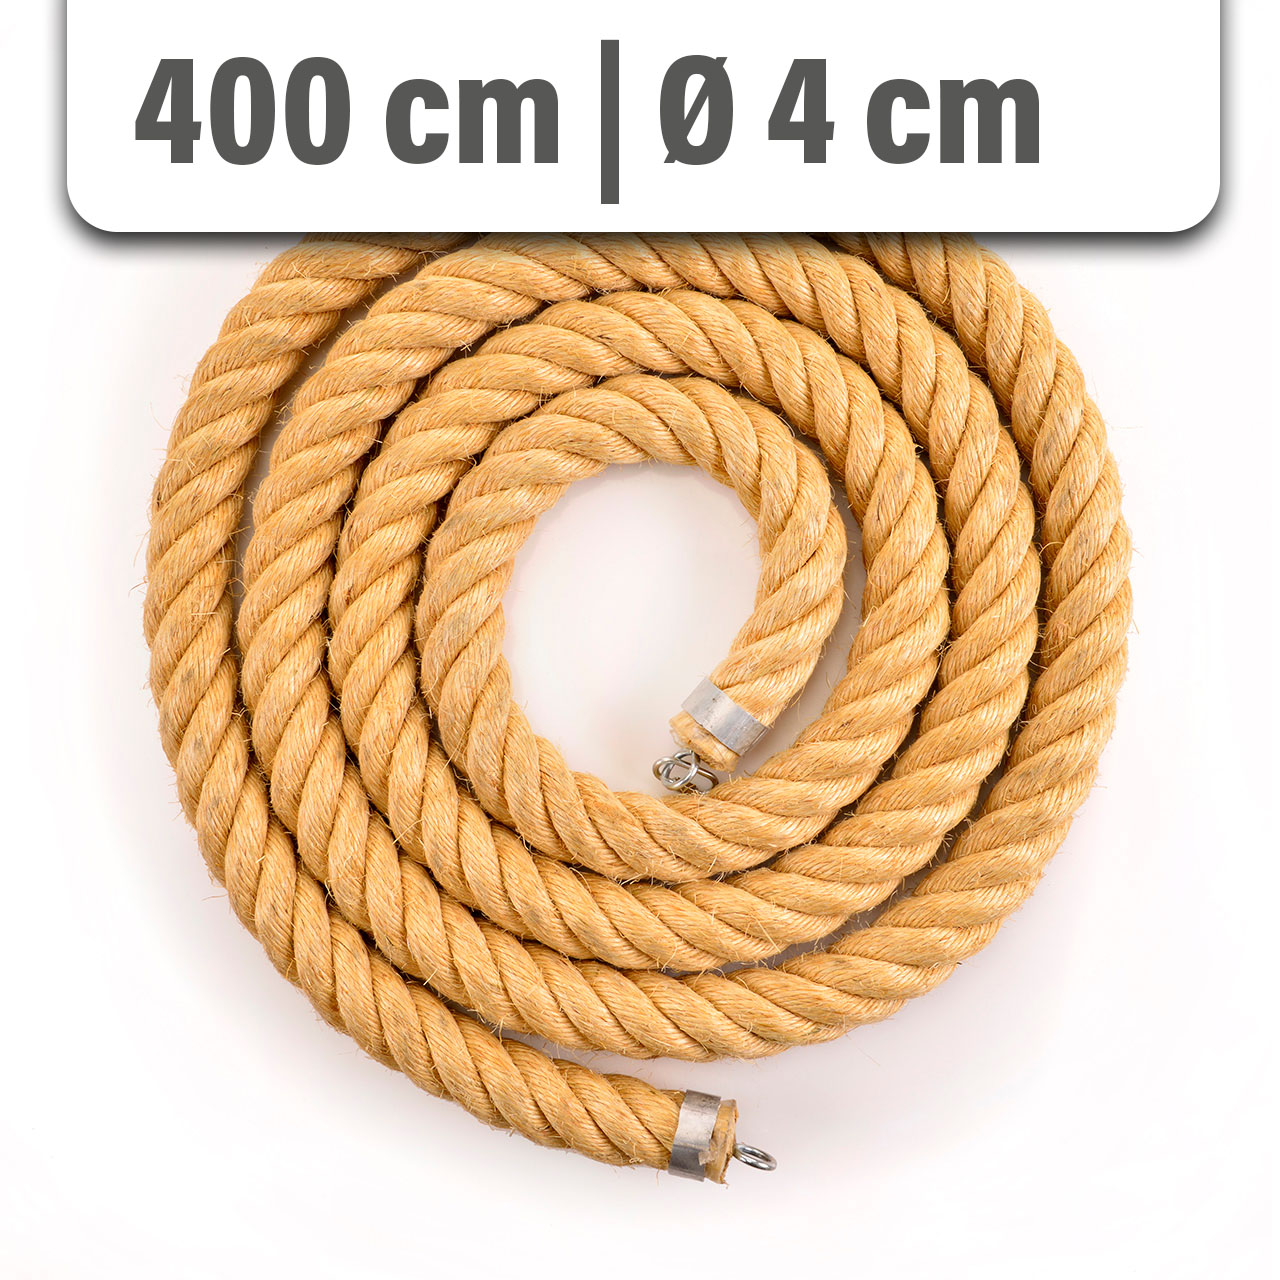 climbing rope made of SISAL 400 x 4cm